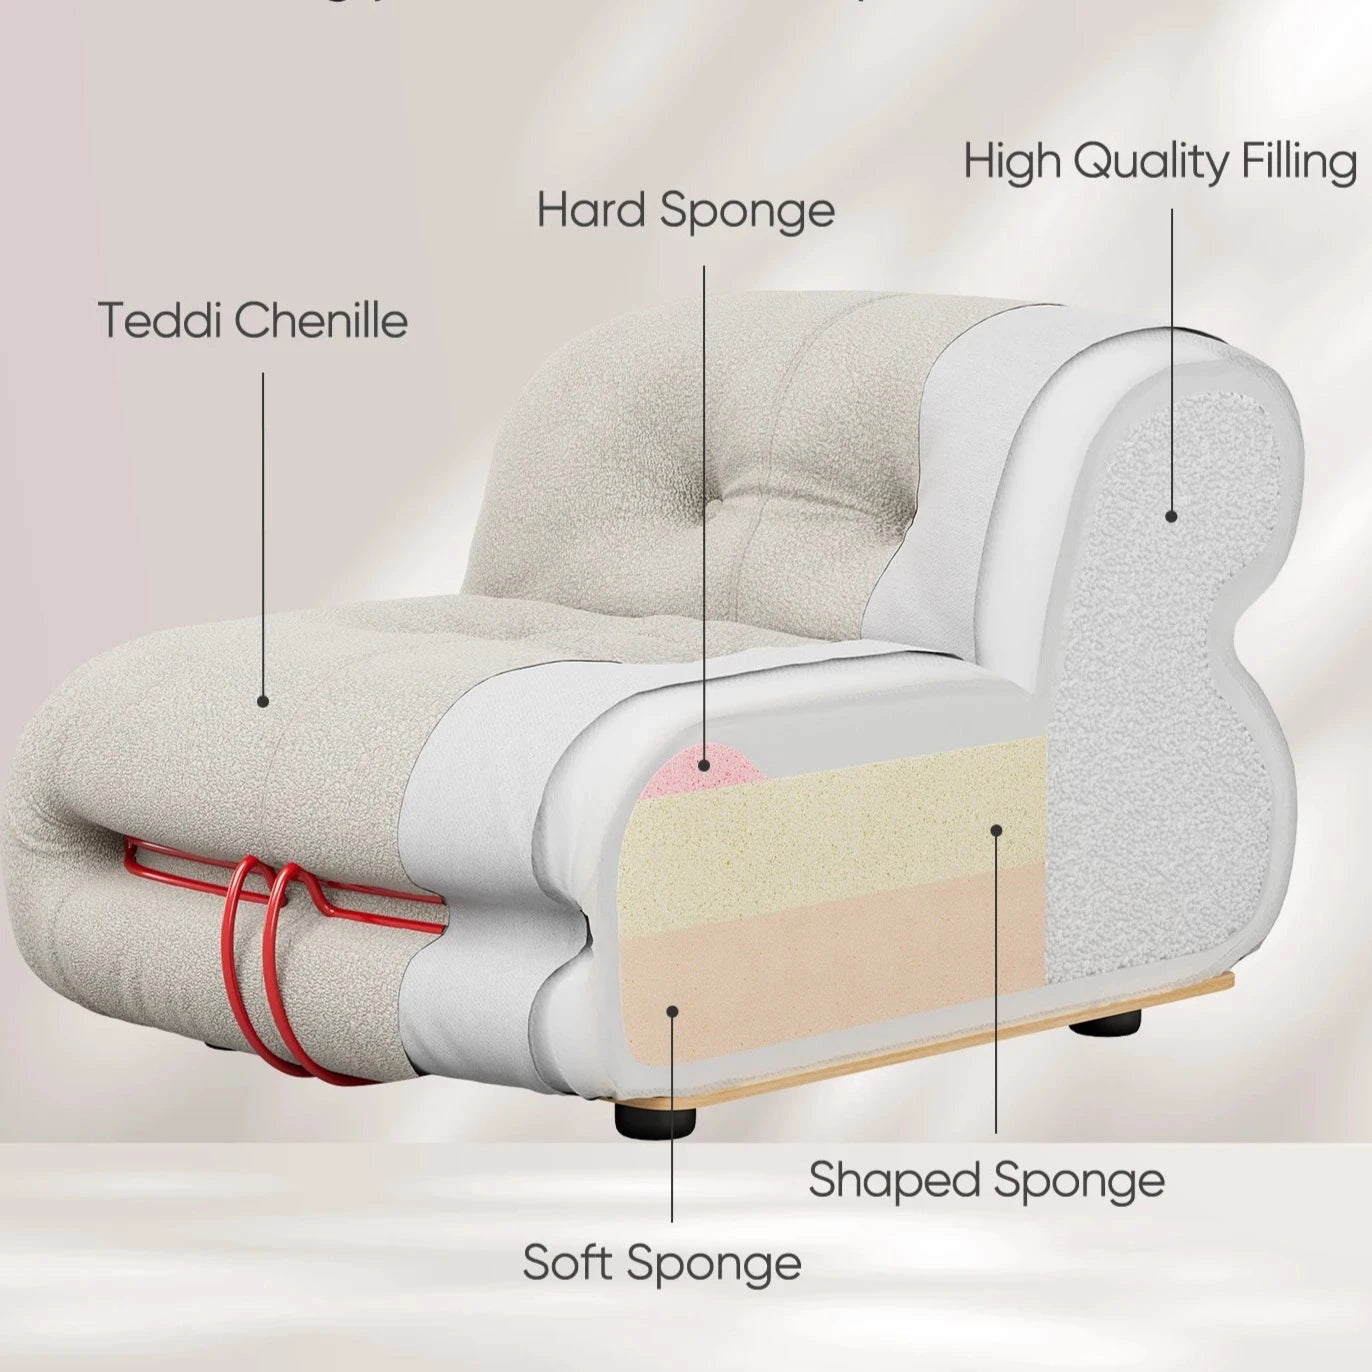 CORX Designs - Solaria Sofa Lounge Chair - Review